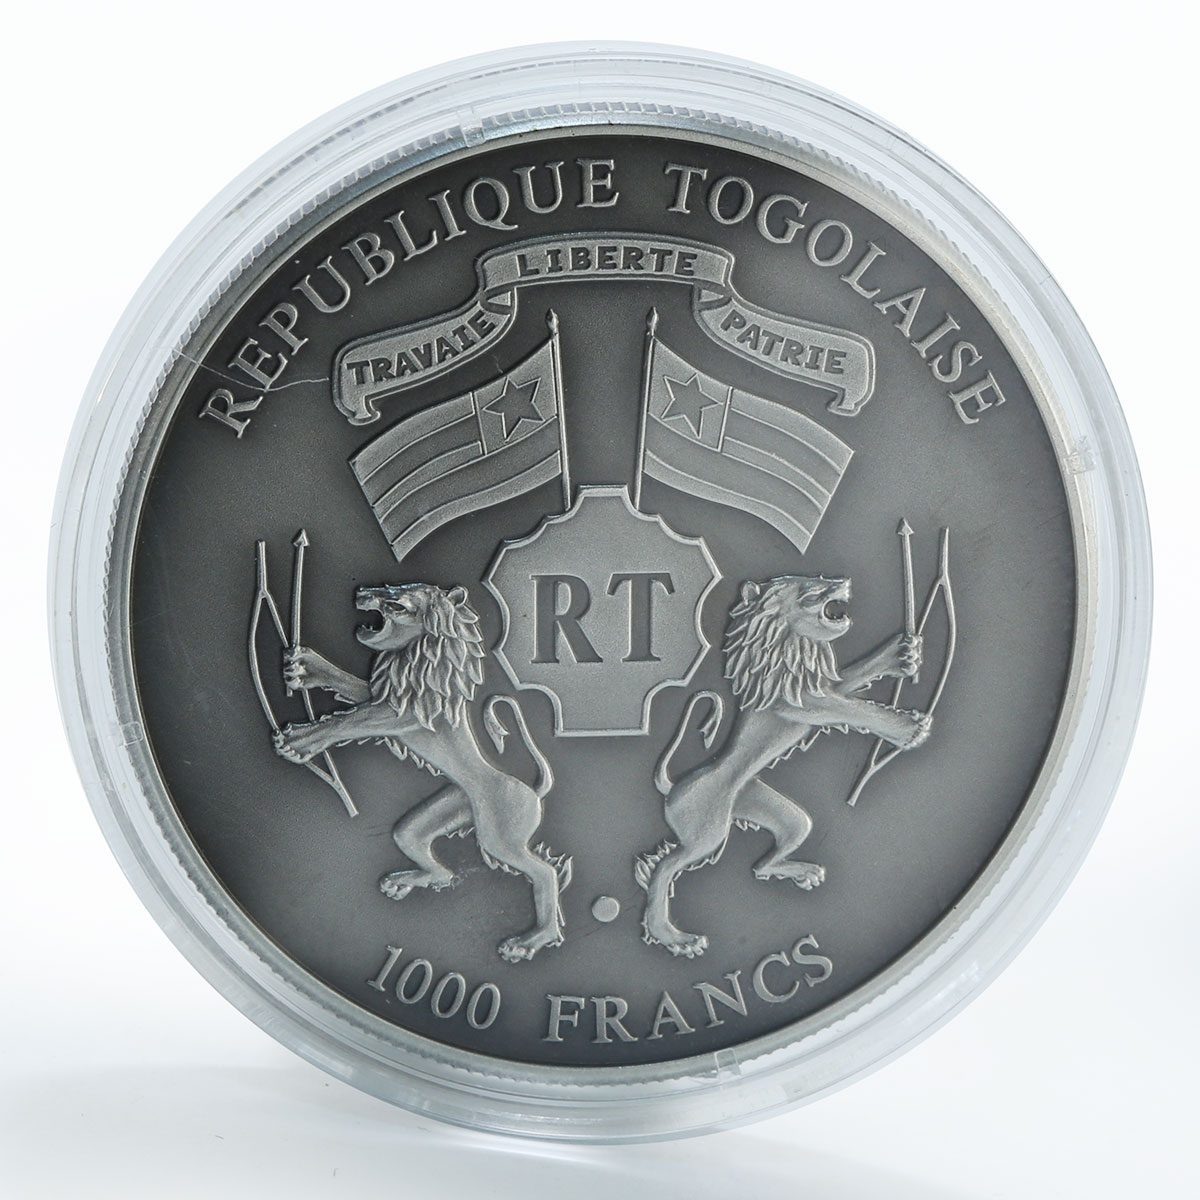 Togo 1000 francs set of 2 coins Sports Antiques silver 2004